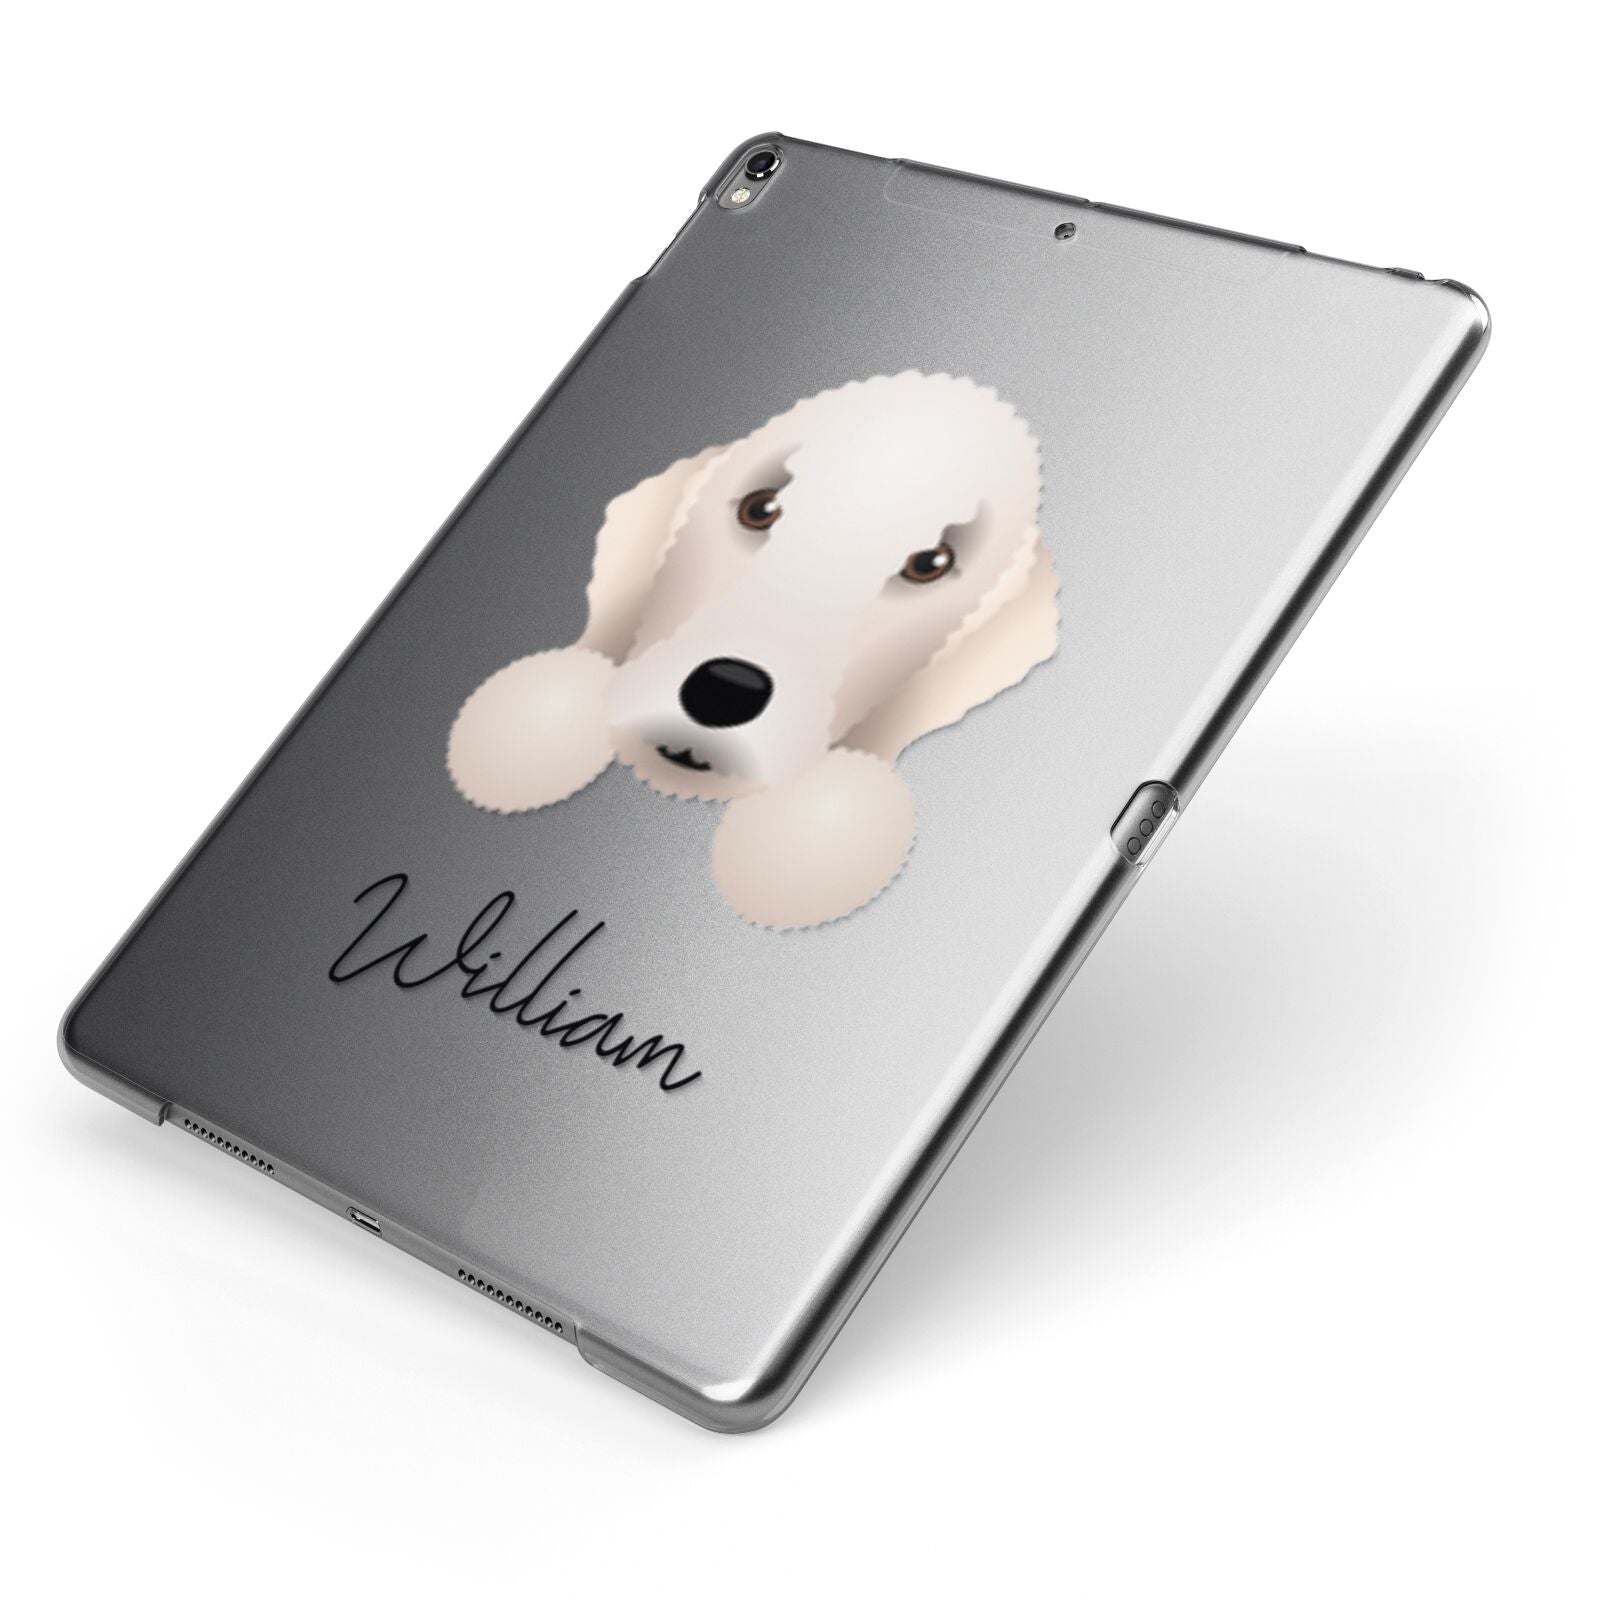 Bedlington Terrier Personalised Apple iPad Case on Grey iPad Side View